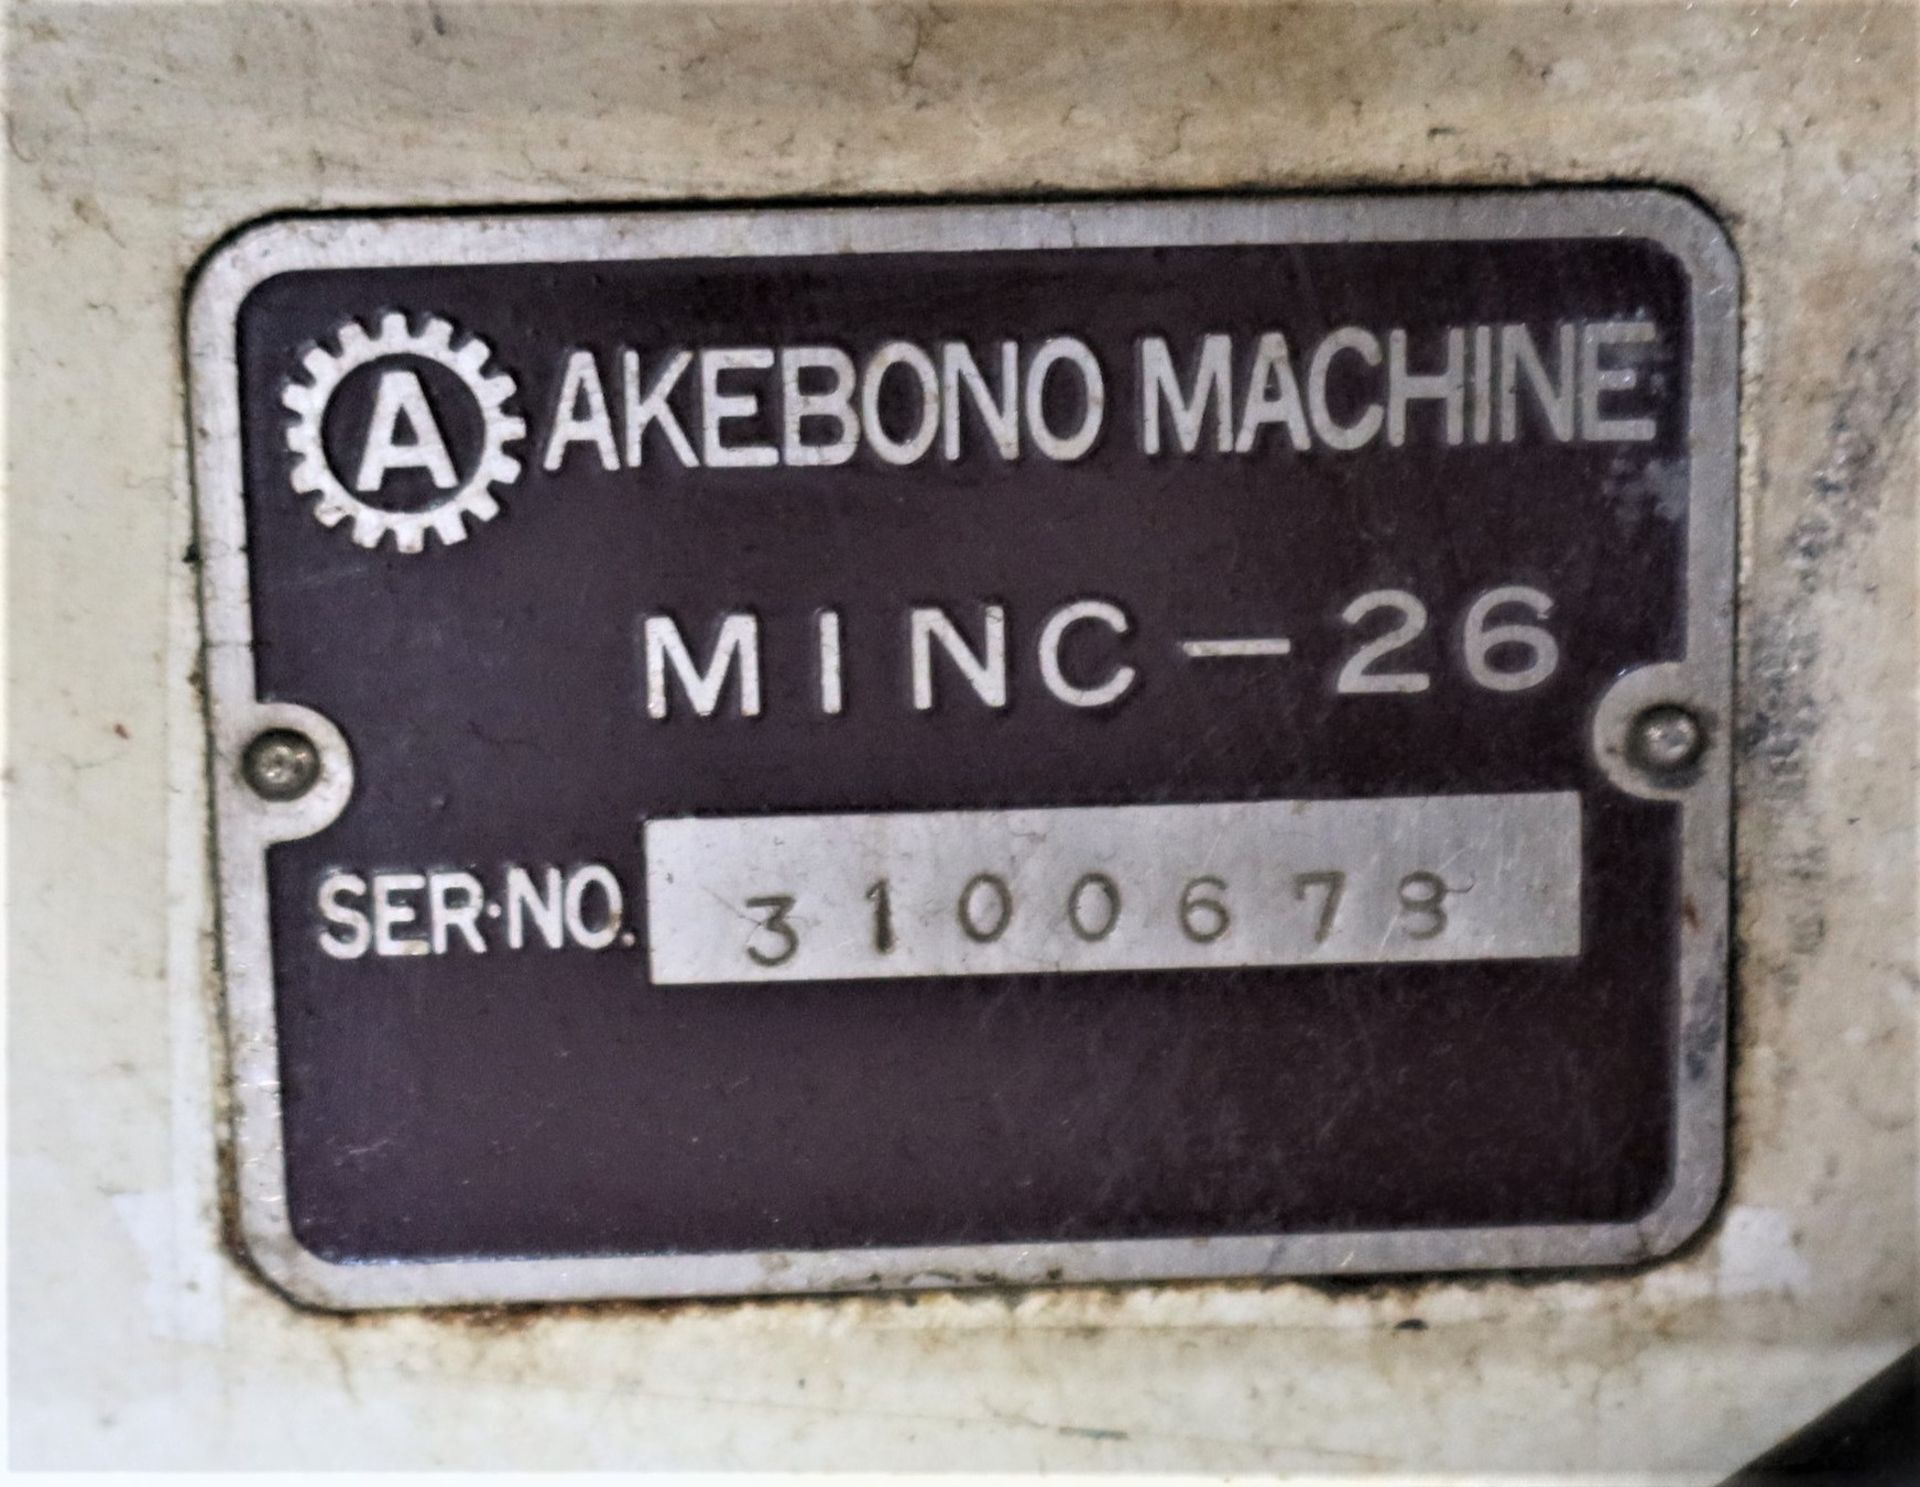 Akebono Minc-26 CNC Gang Tool Lathe - Image 3 of 5